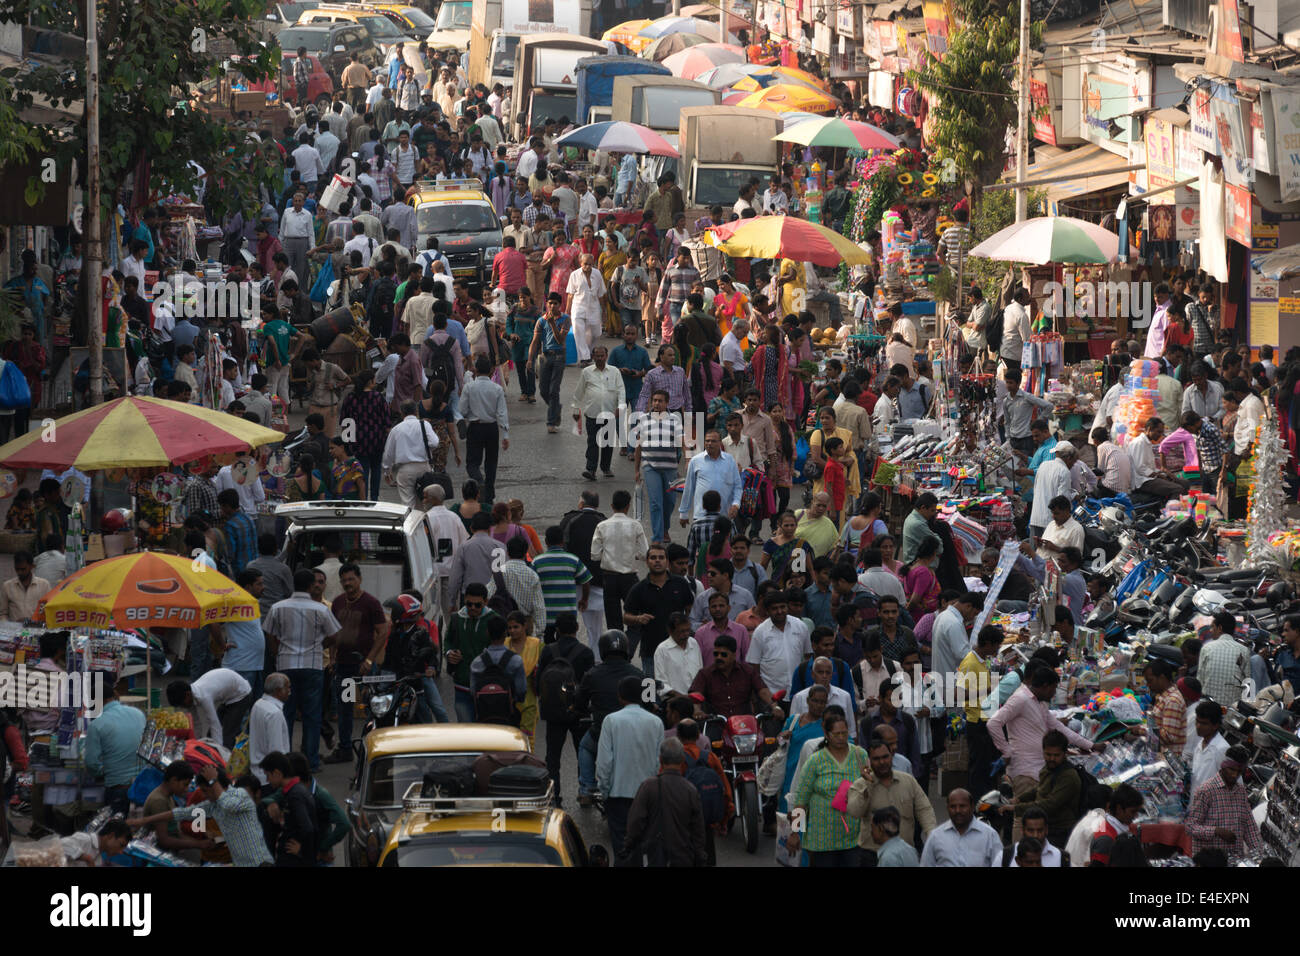 MUMBAI, INDIA - 17 January 2014: Large group of people congested on the street in Dadar, Mumbai. Stock Photo